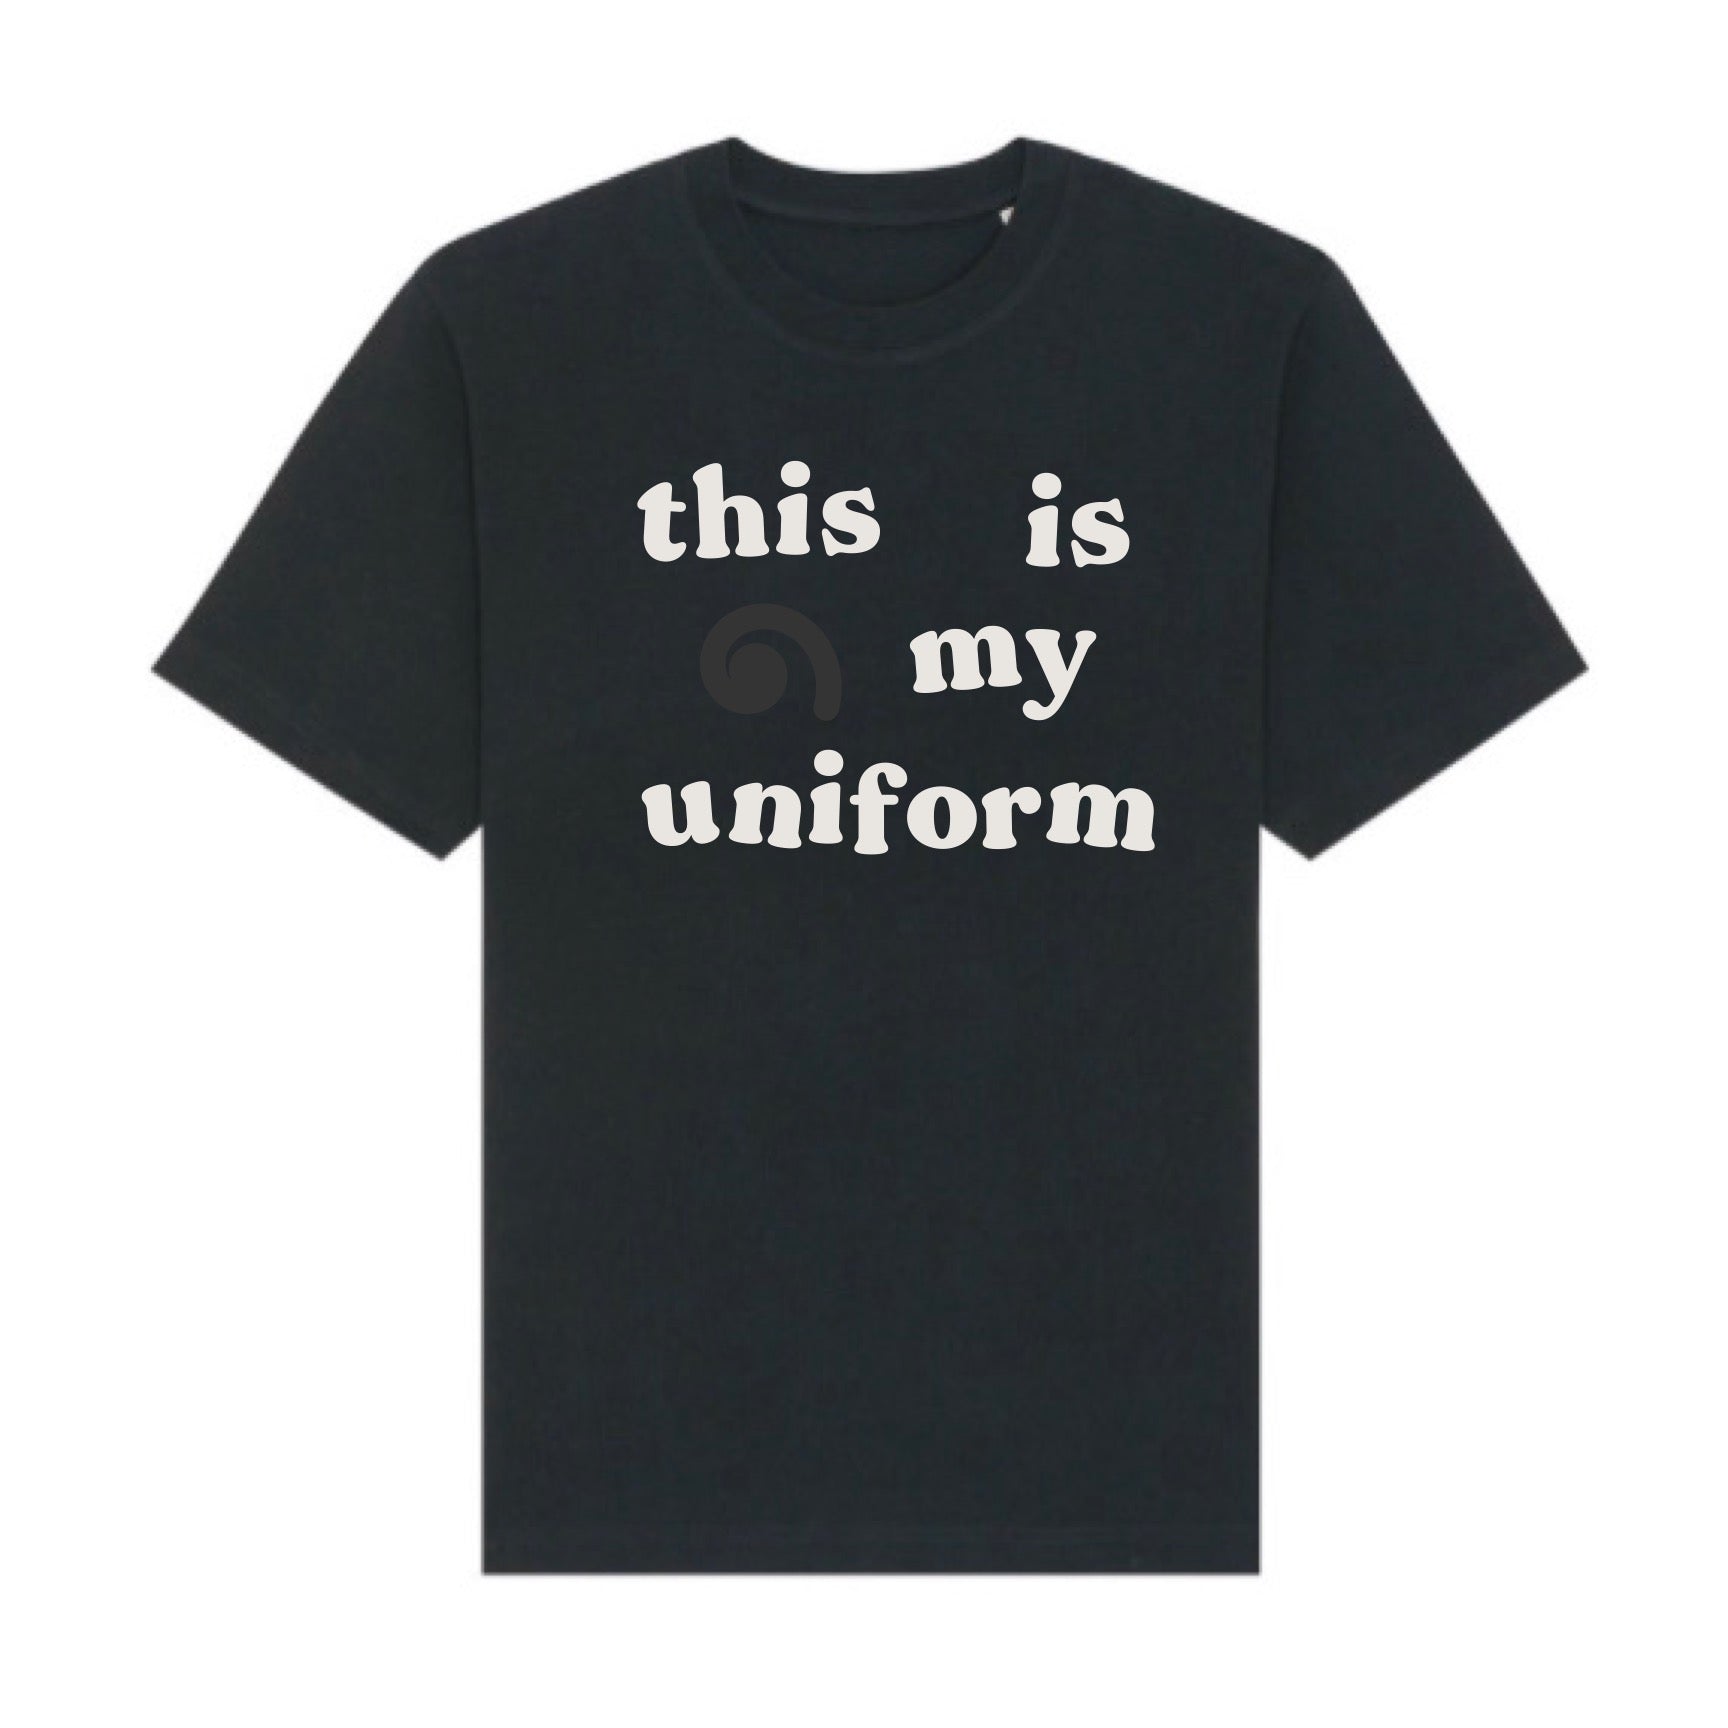 This is my uniform T-shirt - Black